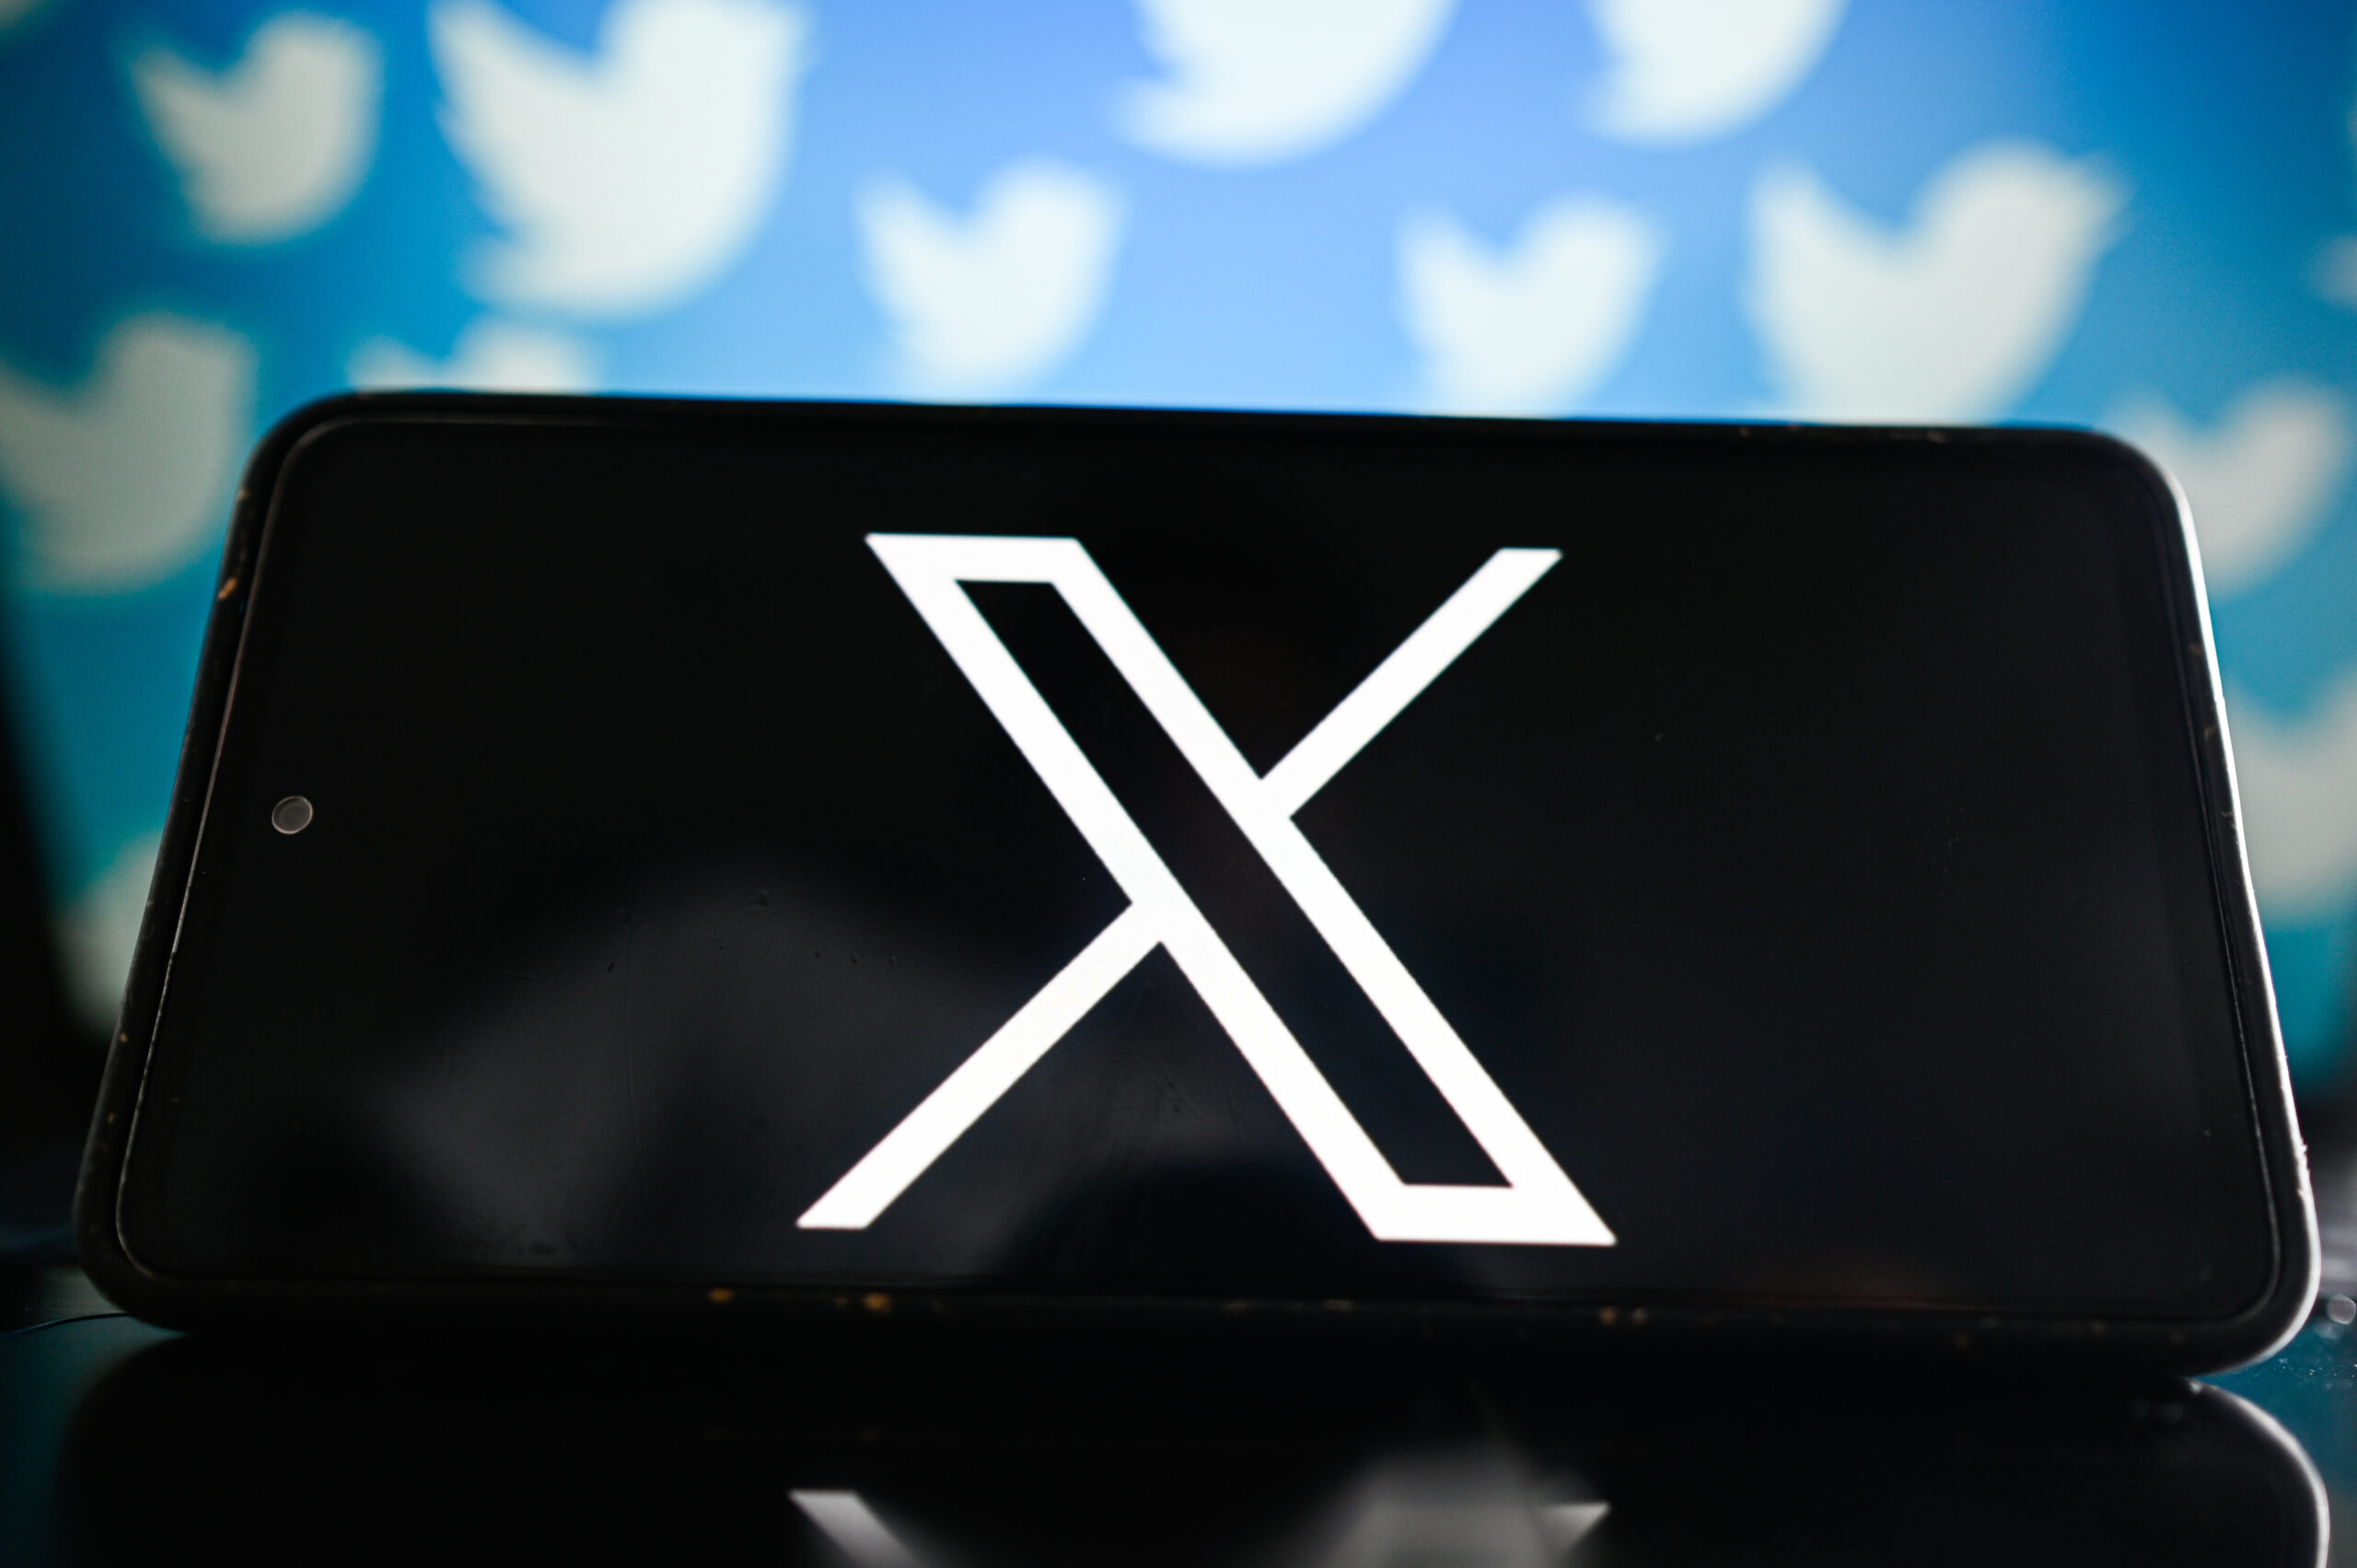 X logo with Twitter blue bird logos behind it